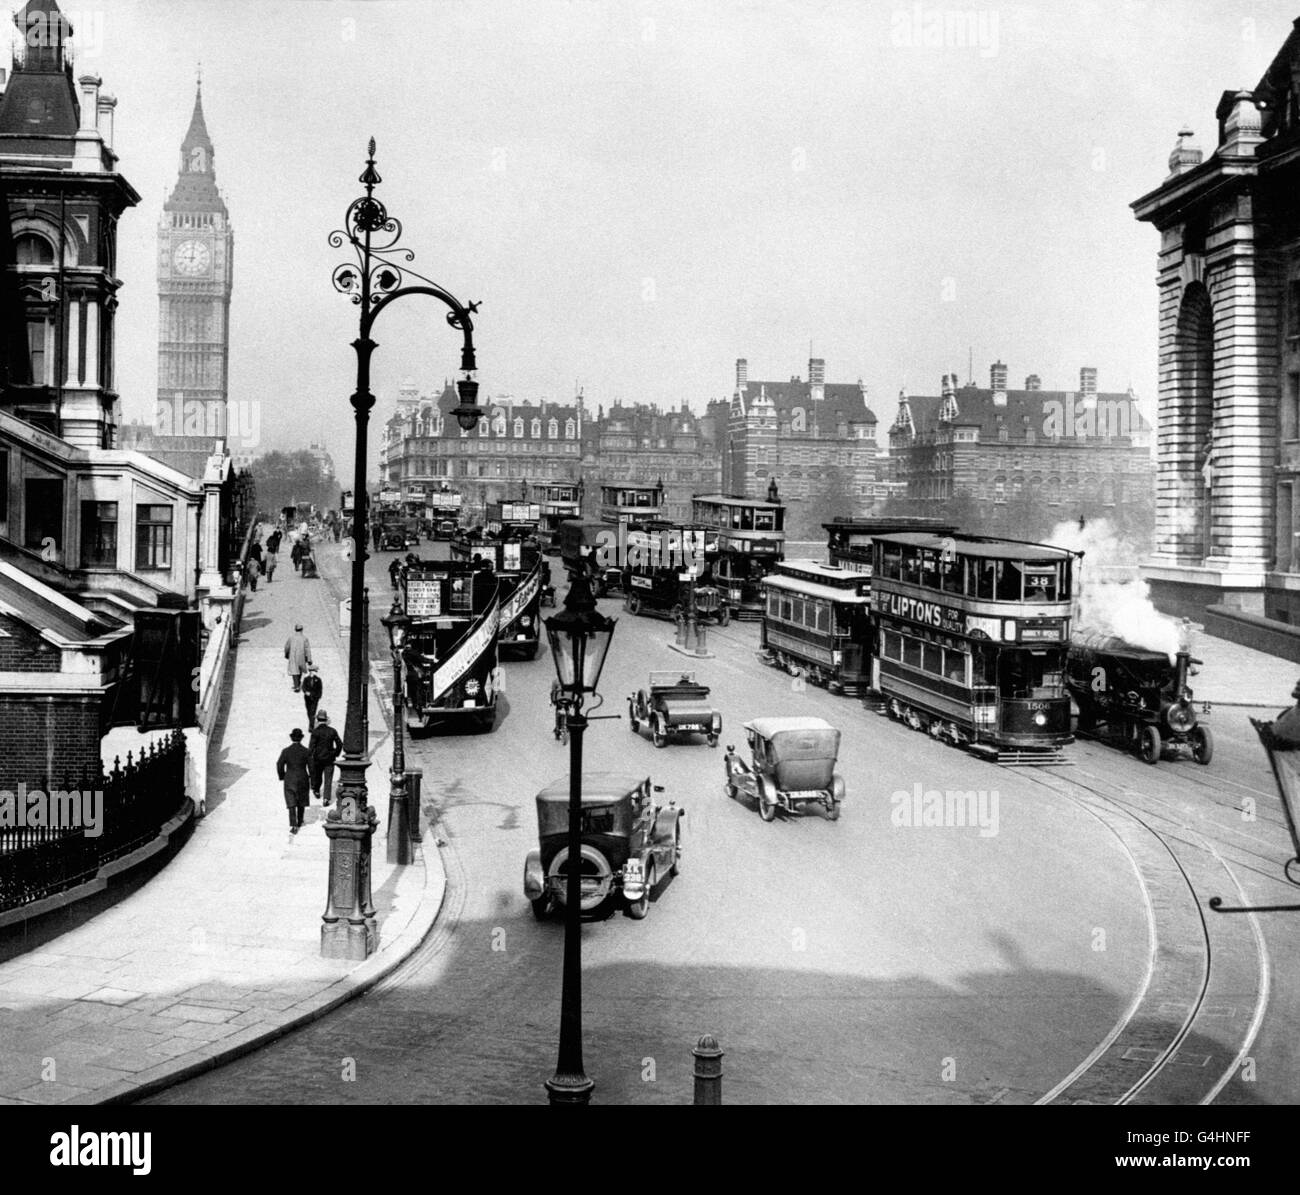 London Scenes - Westminster Bridge - 1926. Traffic returns to normal across Westminster Bridge in London following the General Strike. Stock Photo